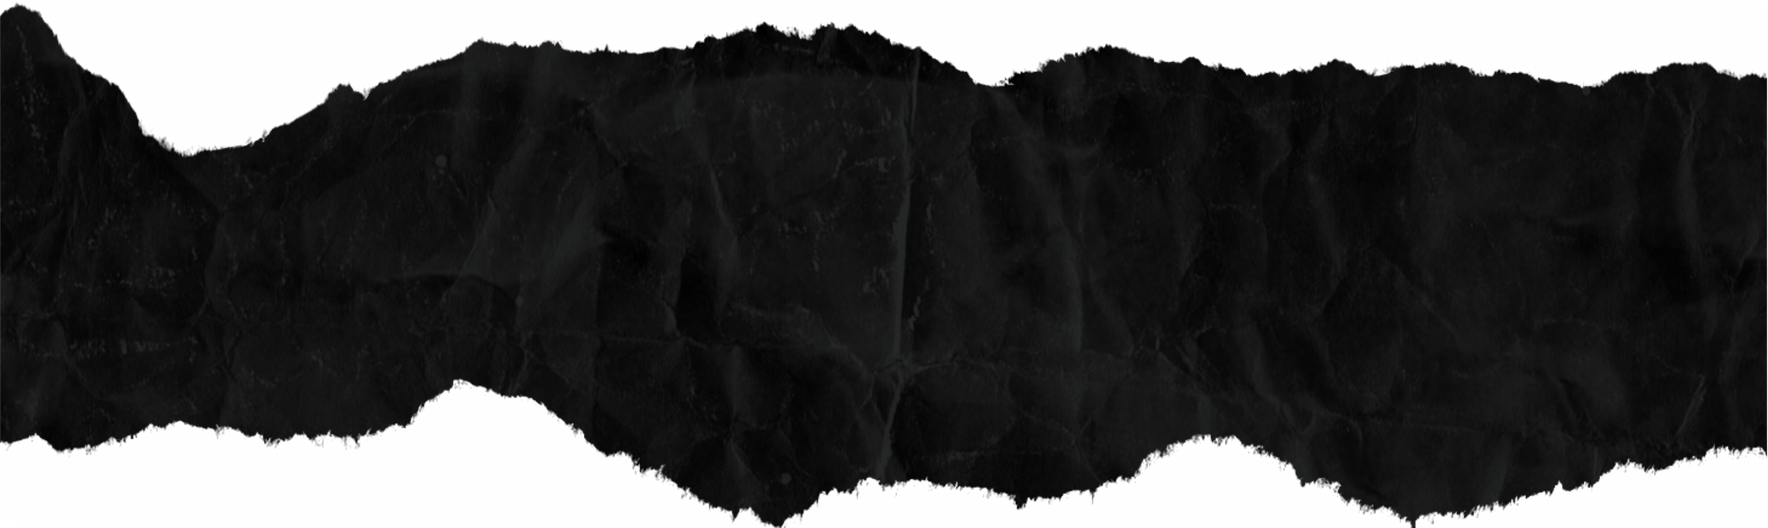 Black Torn Paper Cutout